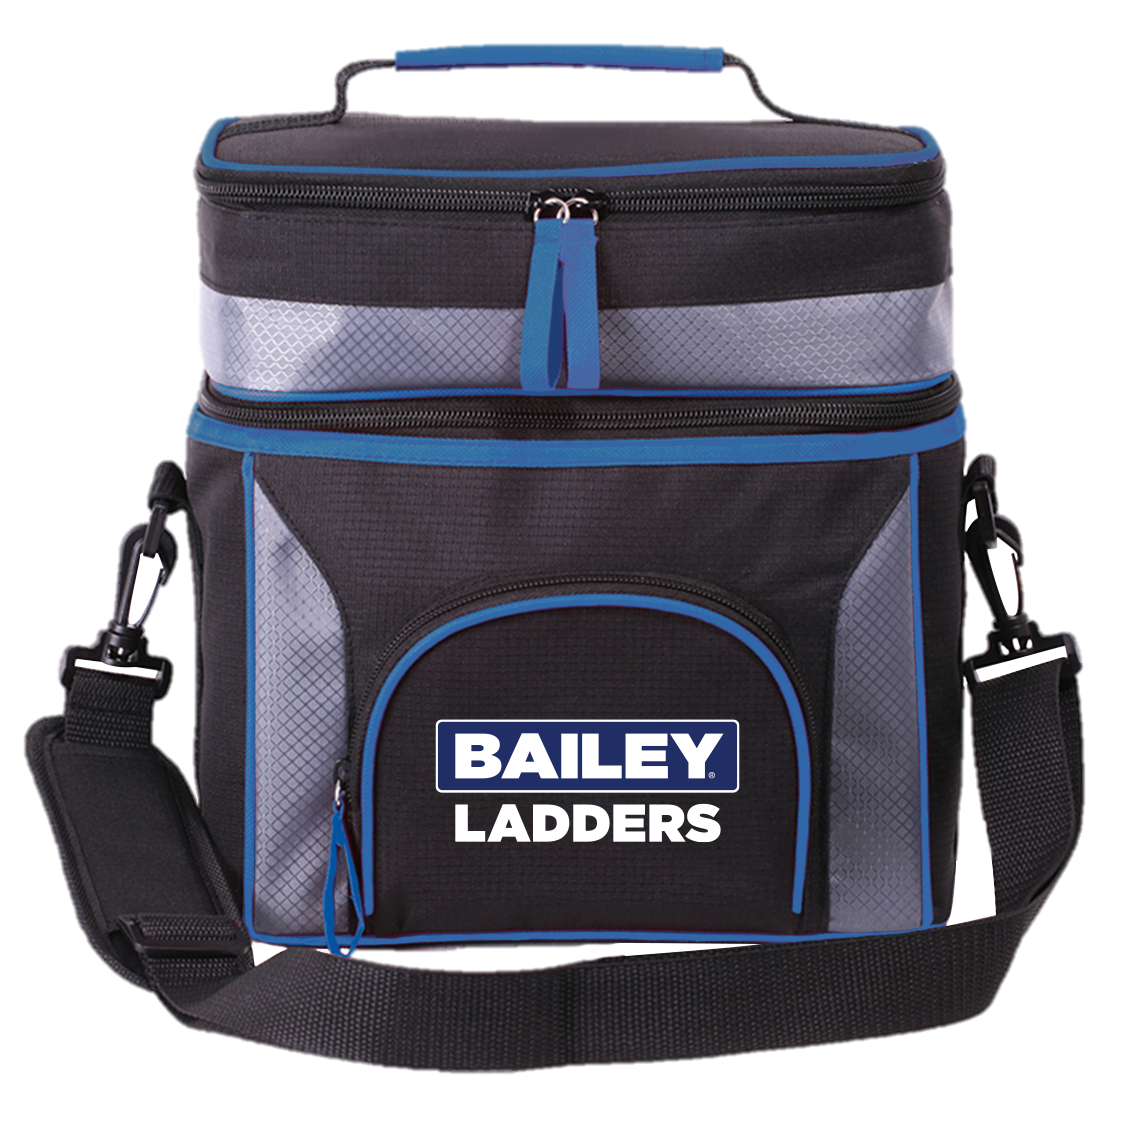 Bailey Ladders Cooler